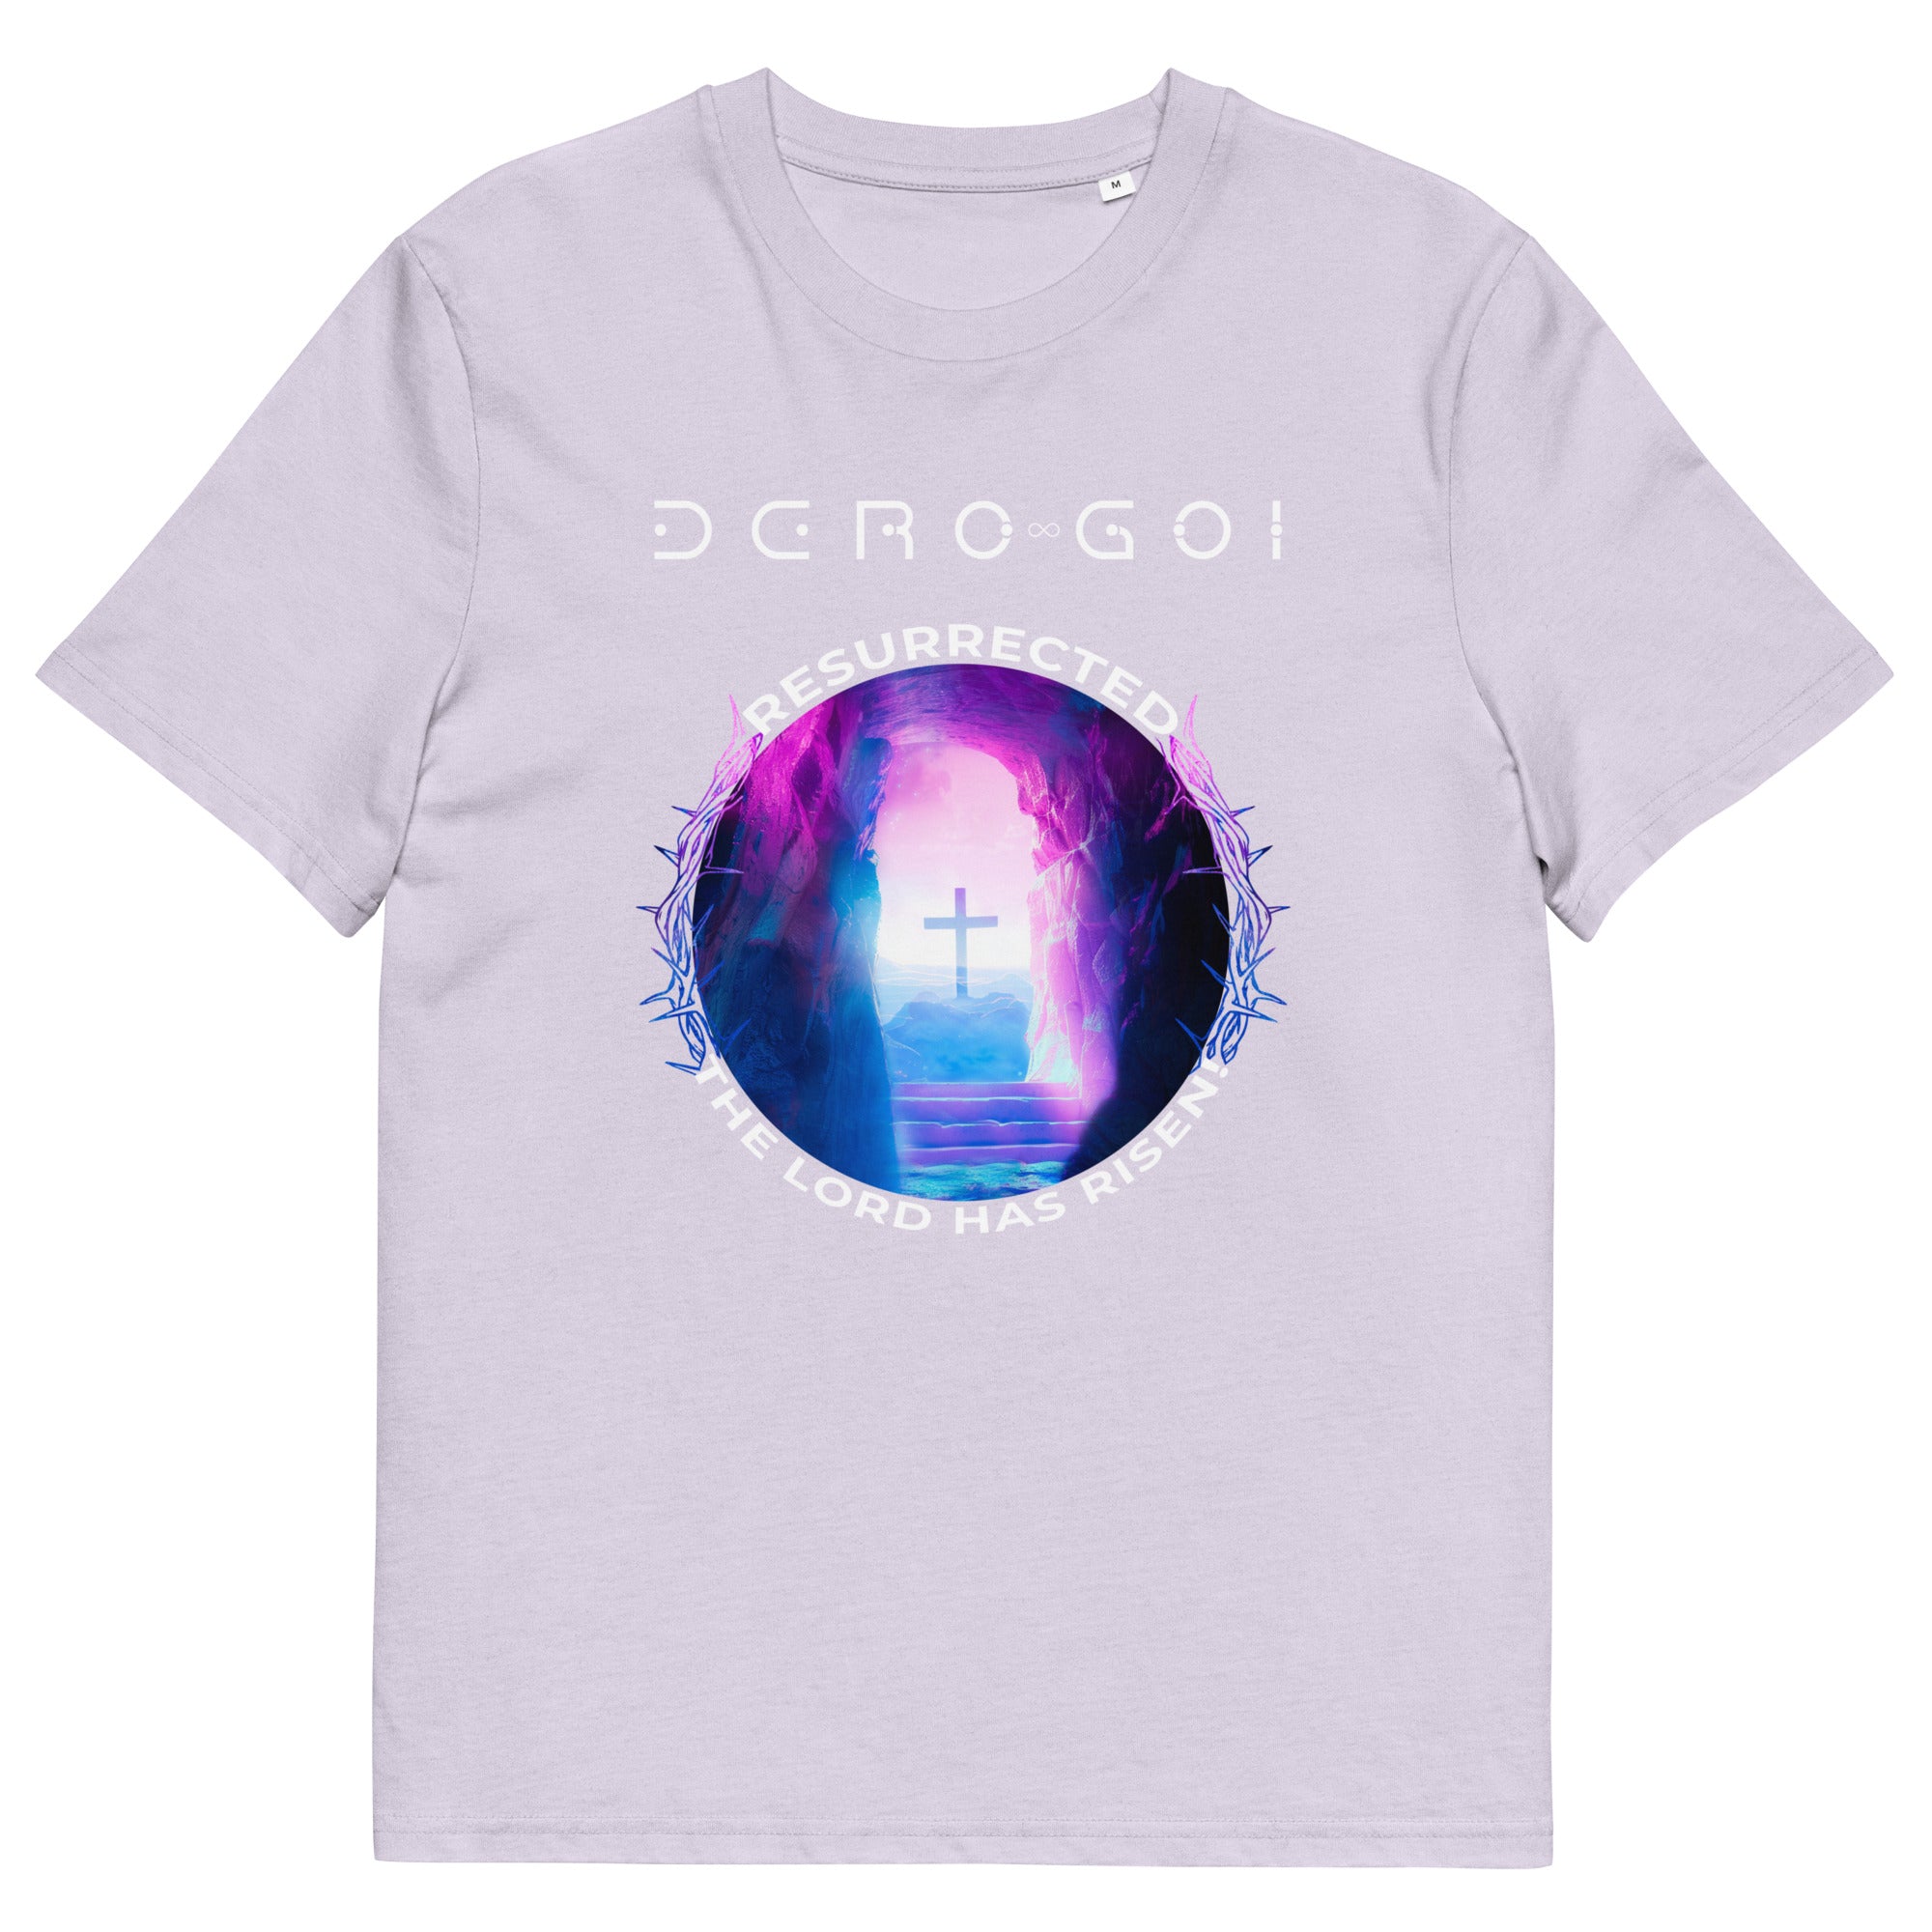 DERO GOI - Resurrected - Unisex Organic Cotton T-shirt